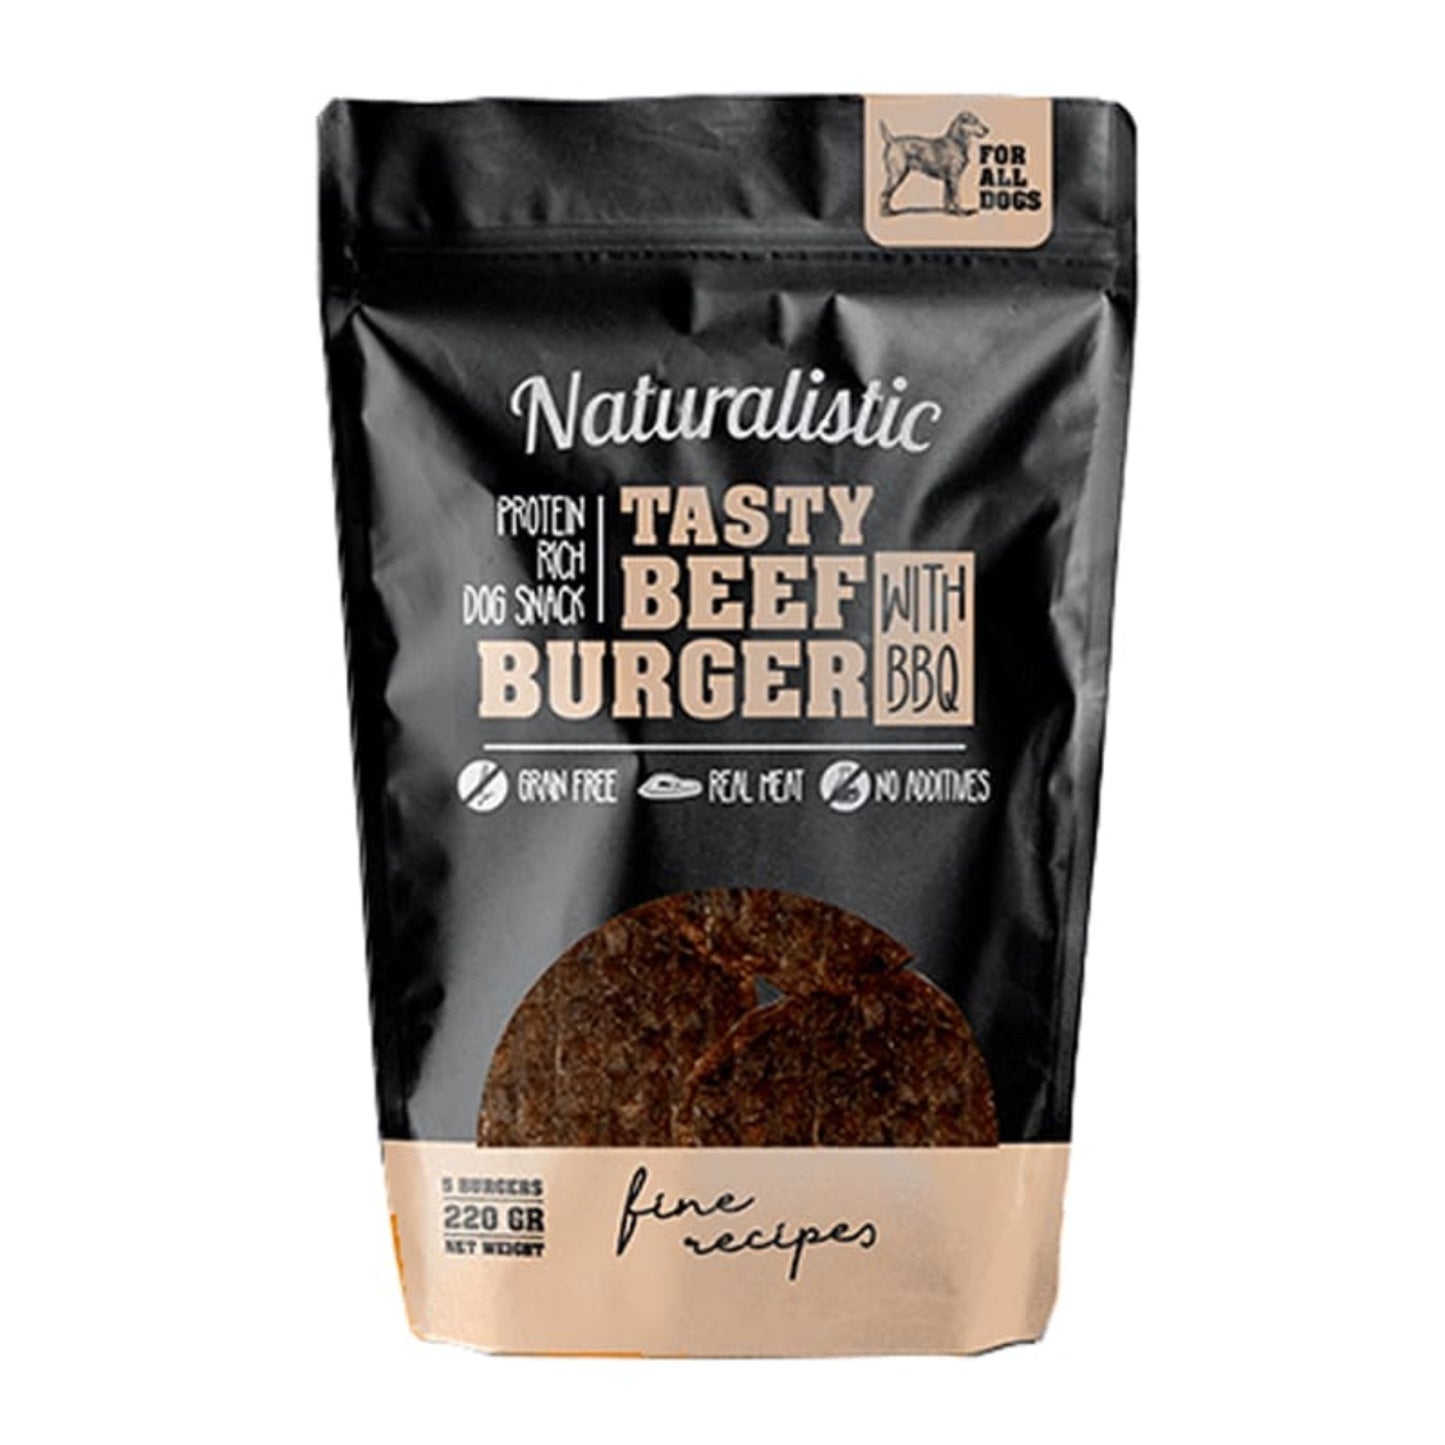 Naturalistic Tasty Burger Whit BBQ 220 gr